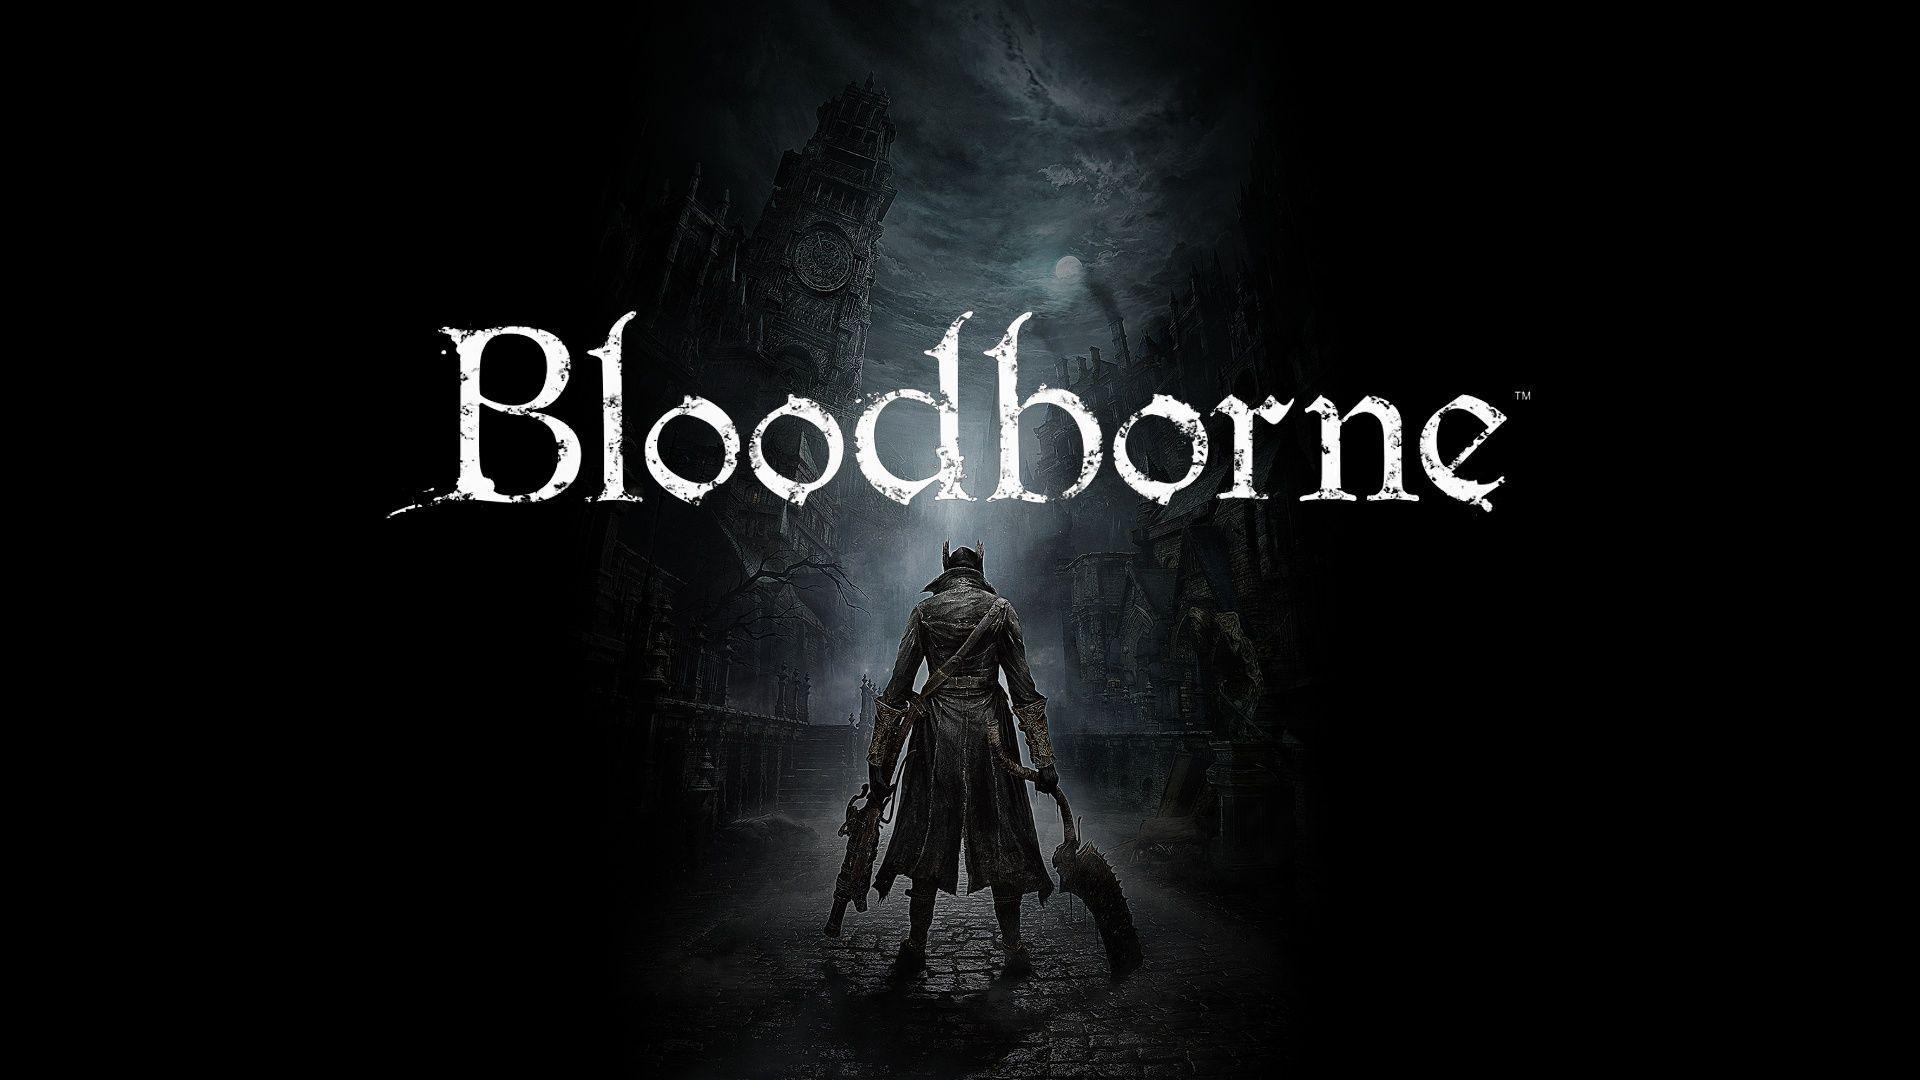 Bloodborne Wallpapers  Top 30 Best Bloodborne Wallpapers Download